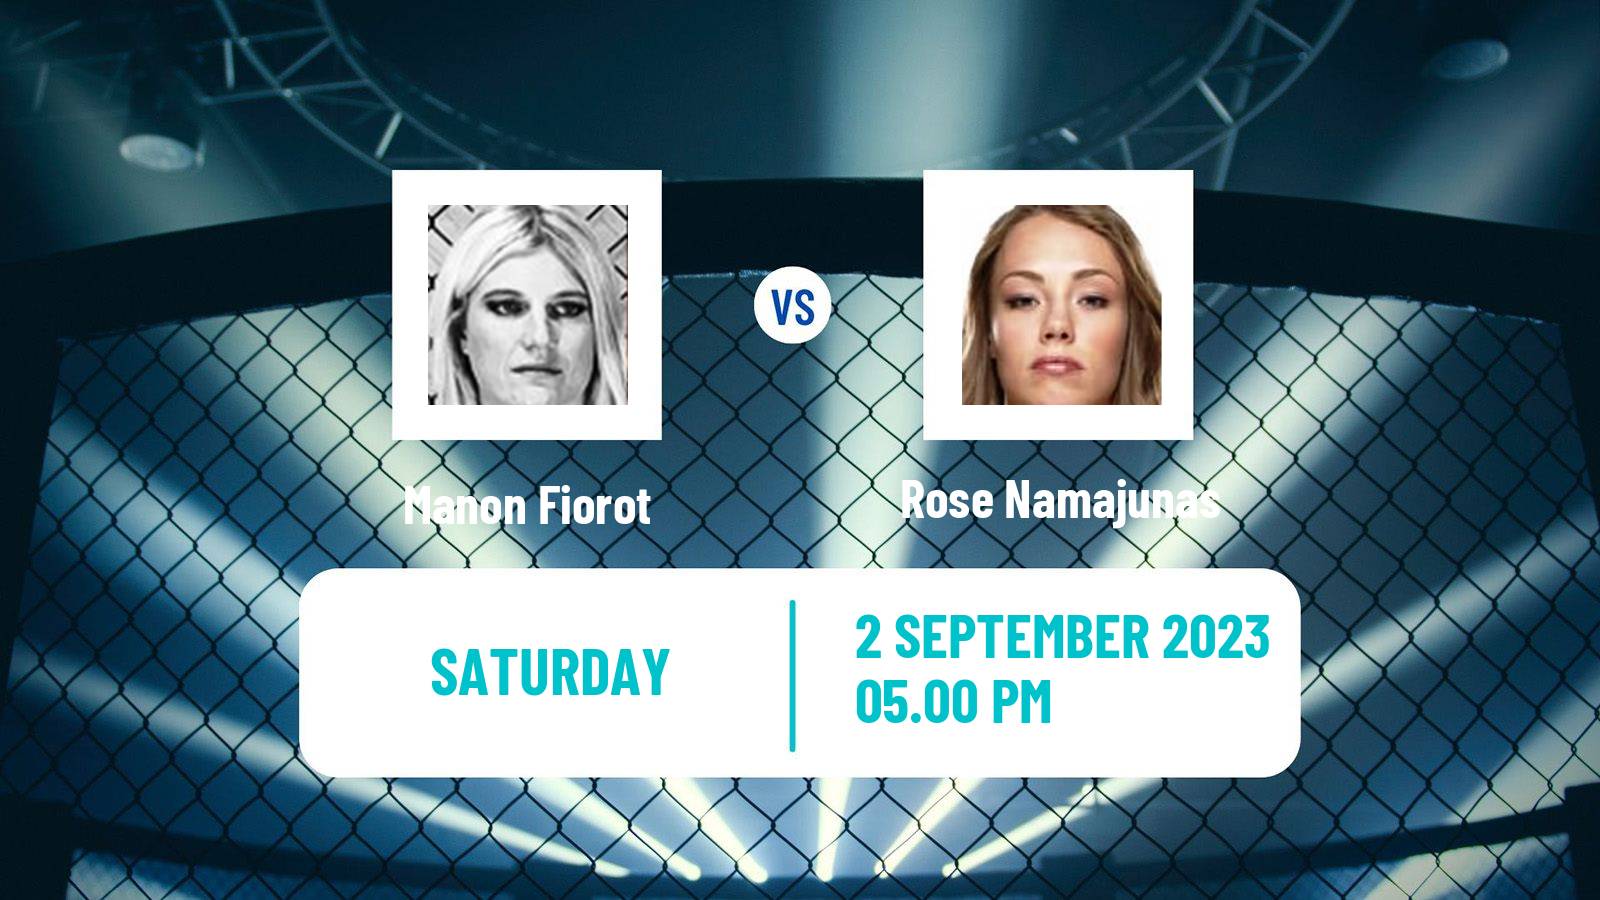 MMA Flyweight Women UFC Manon Fiorot - Rose Namajunas